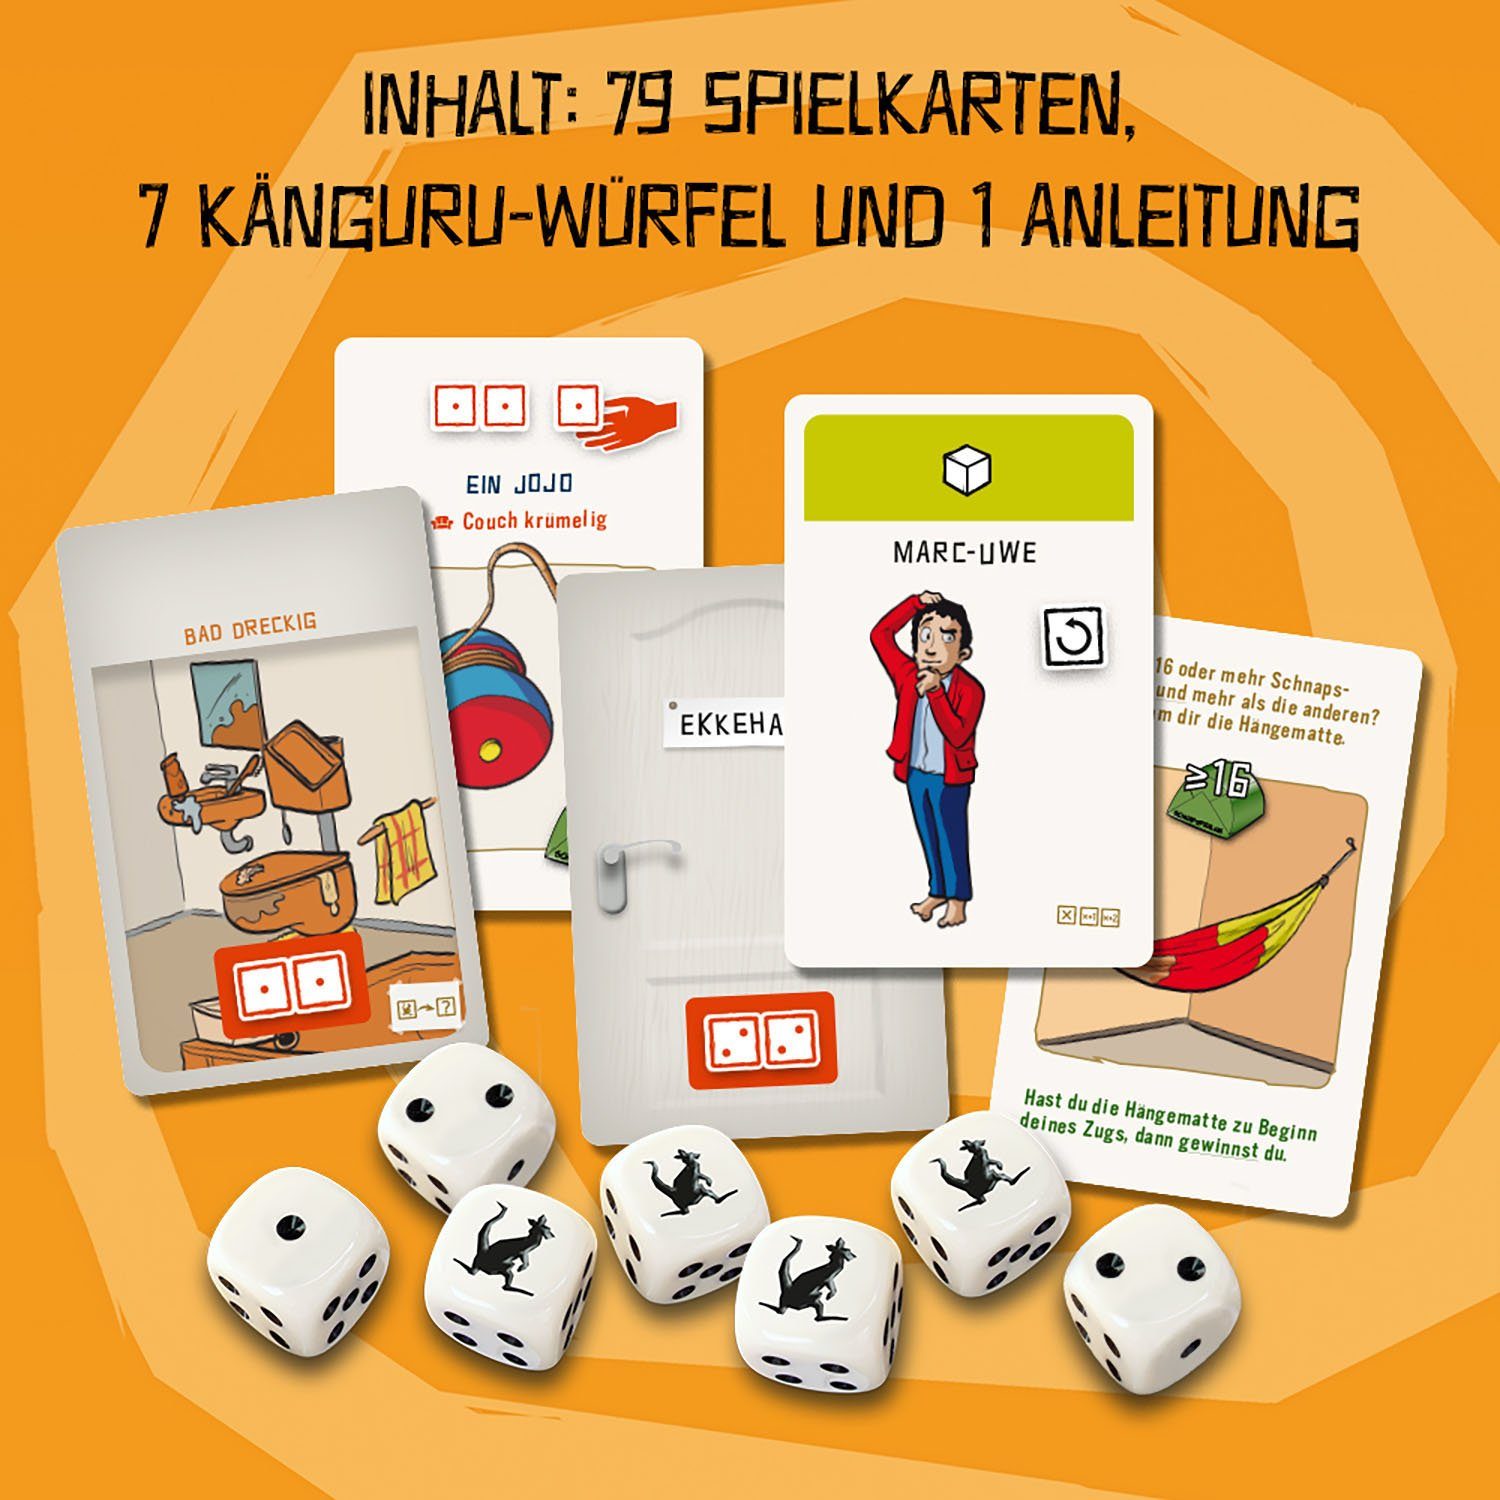 Spiel, Germany Kosmos in Würfelspiel Würfel-WG, Made